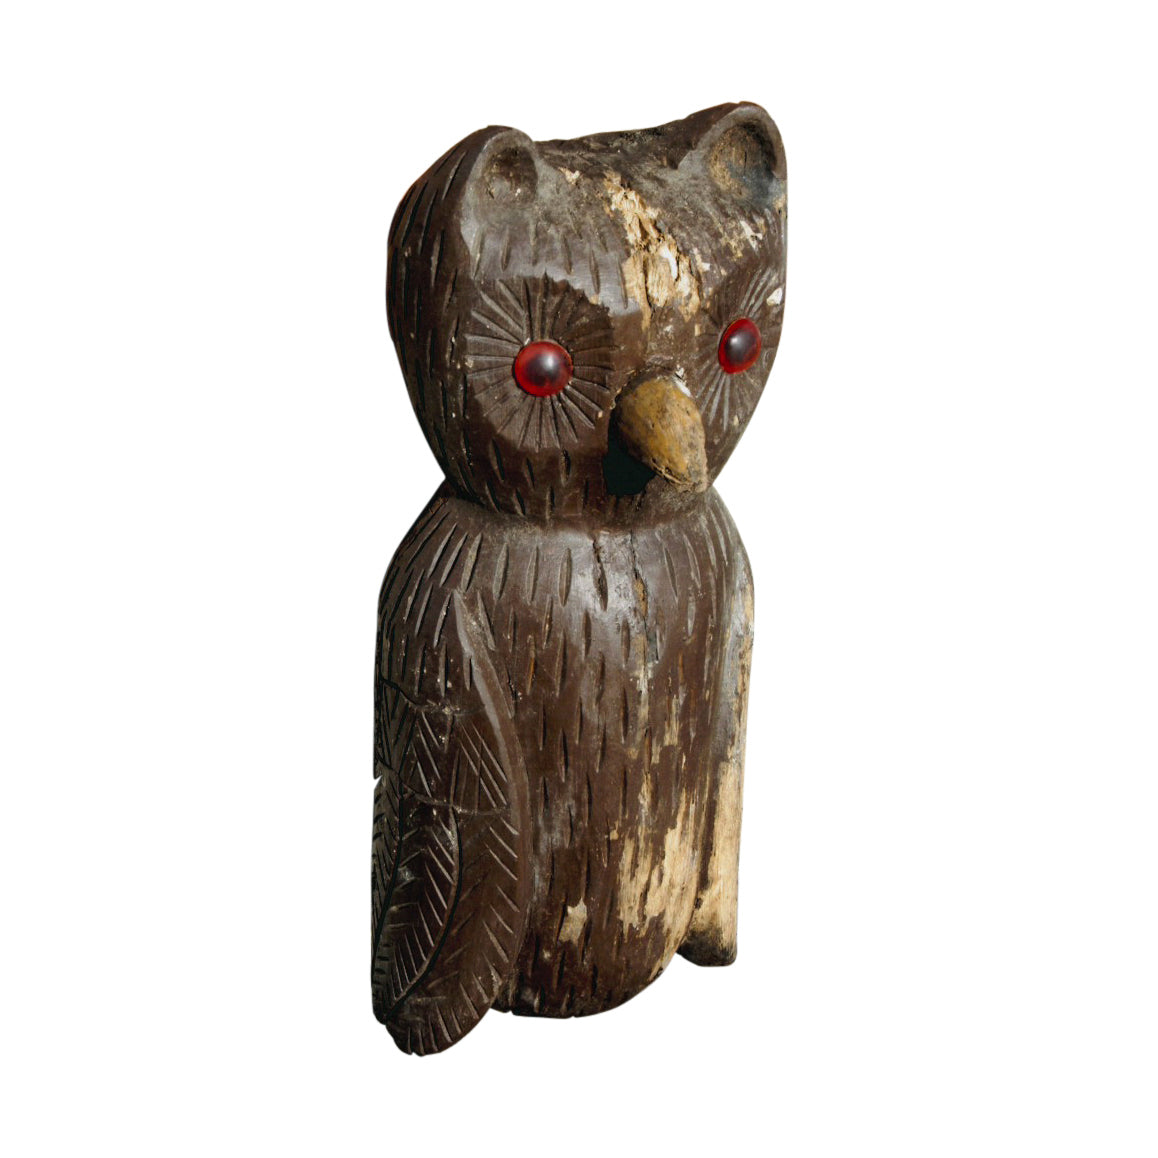 Owl Decoy, Furnishings, Decor, Carving